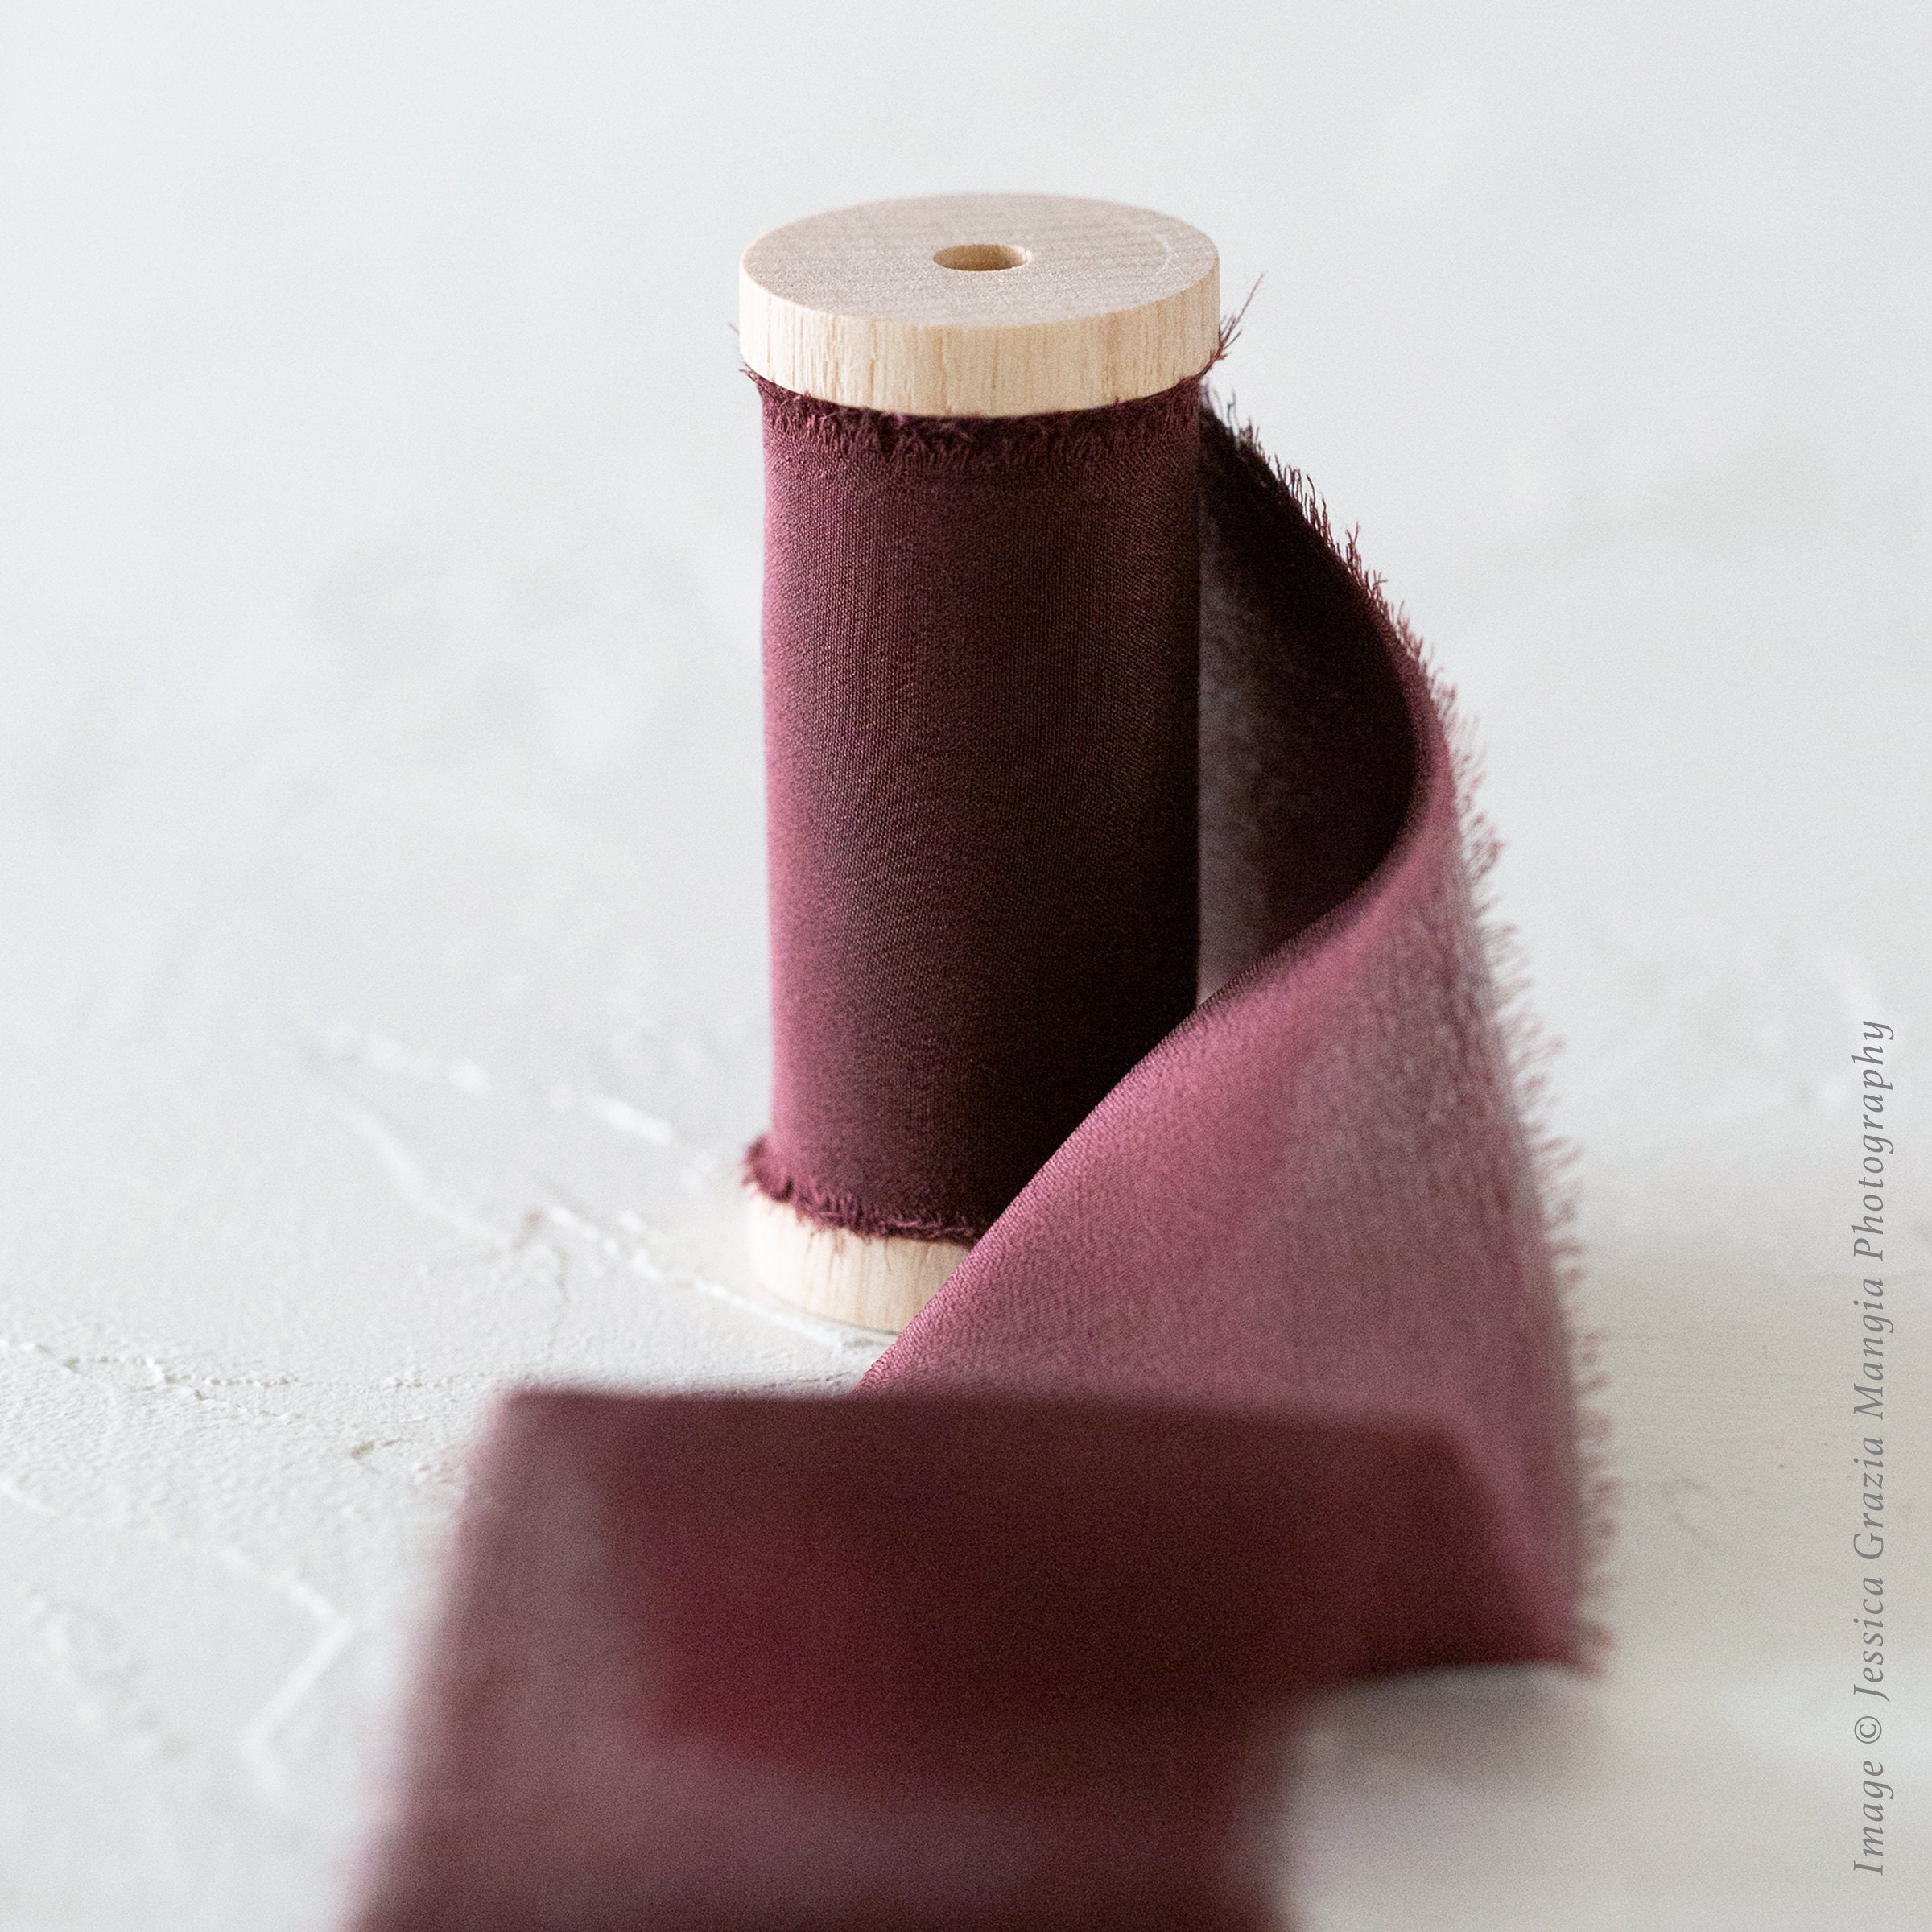 Premium Quality Dubonnet Tissue Paper Sheets, Burgundy Gift